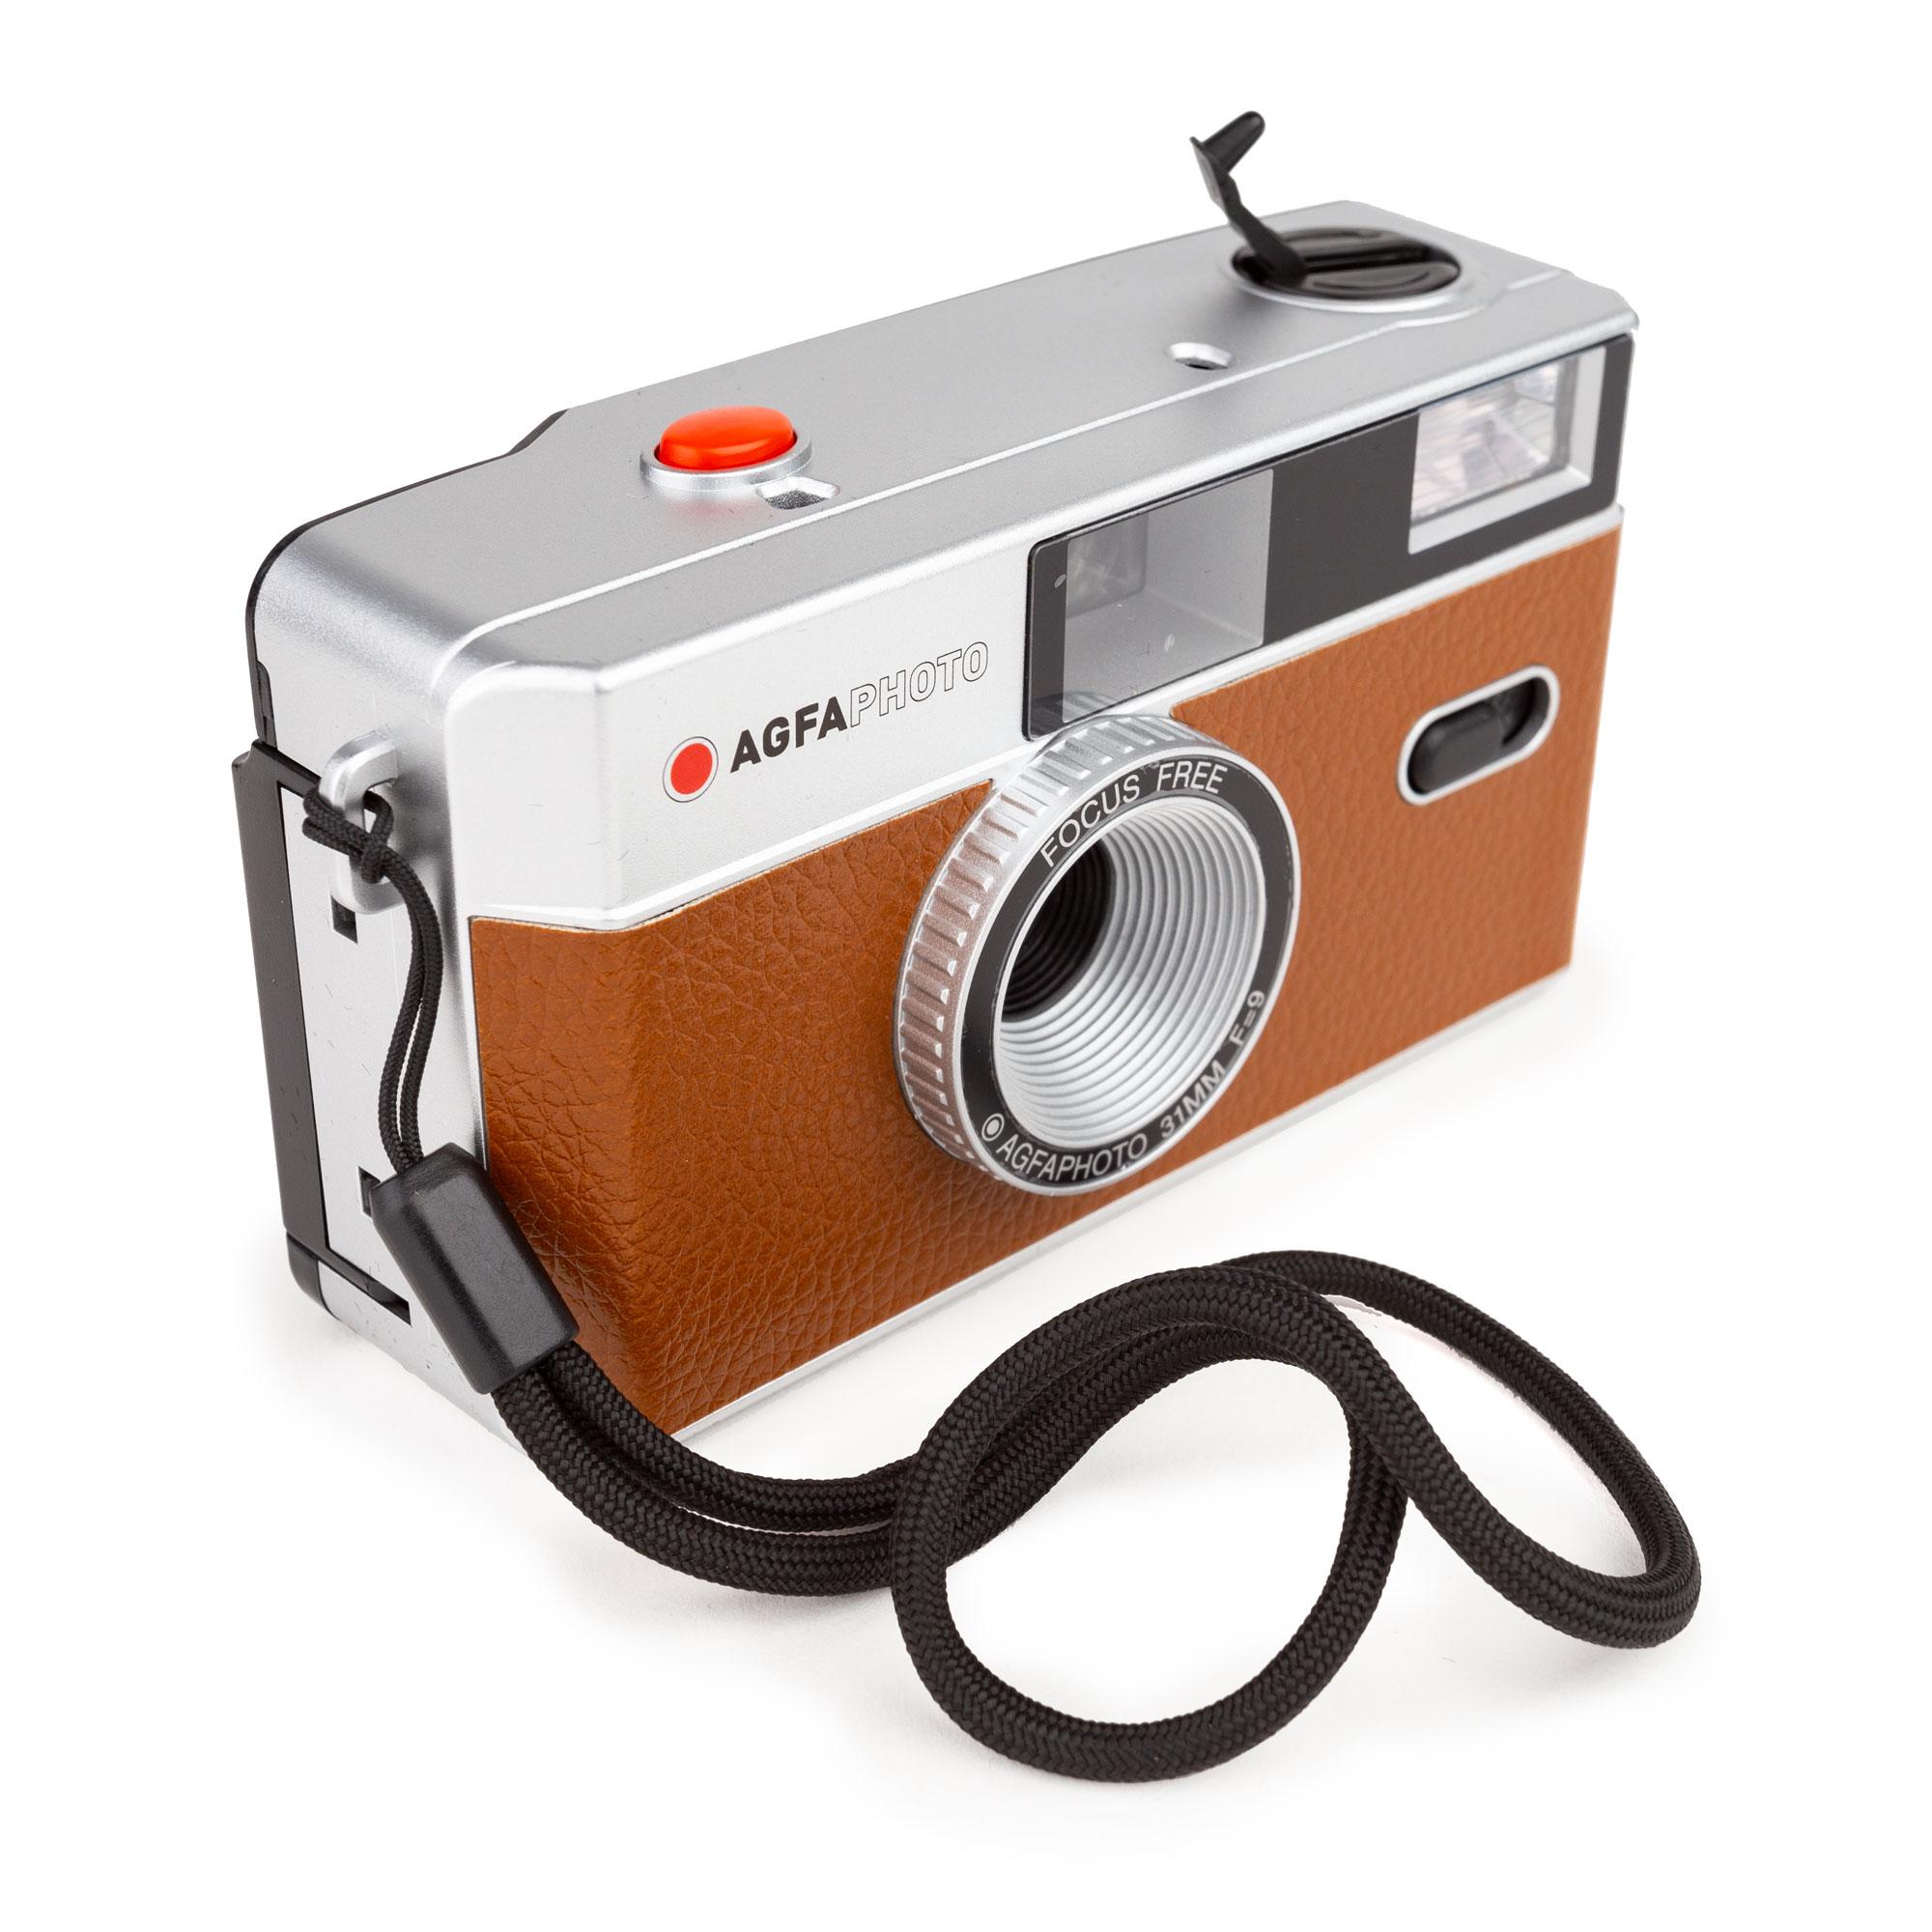 AgfaPhoto analoge Kleinbild Kamera braun 3 Fuji c200 Farbfilm 35mm Fotoapparat 